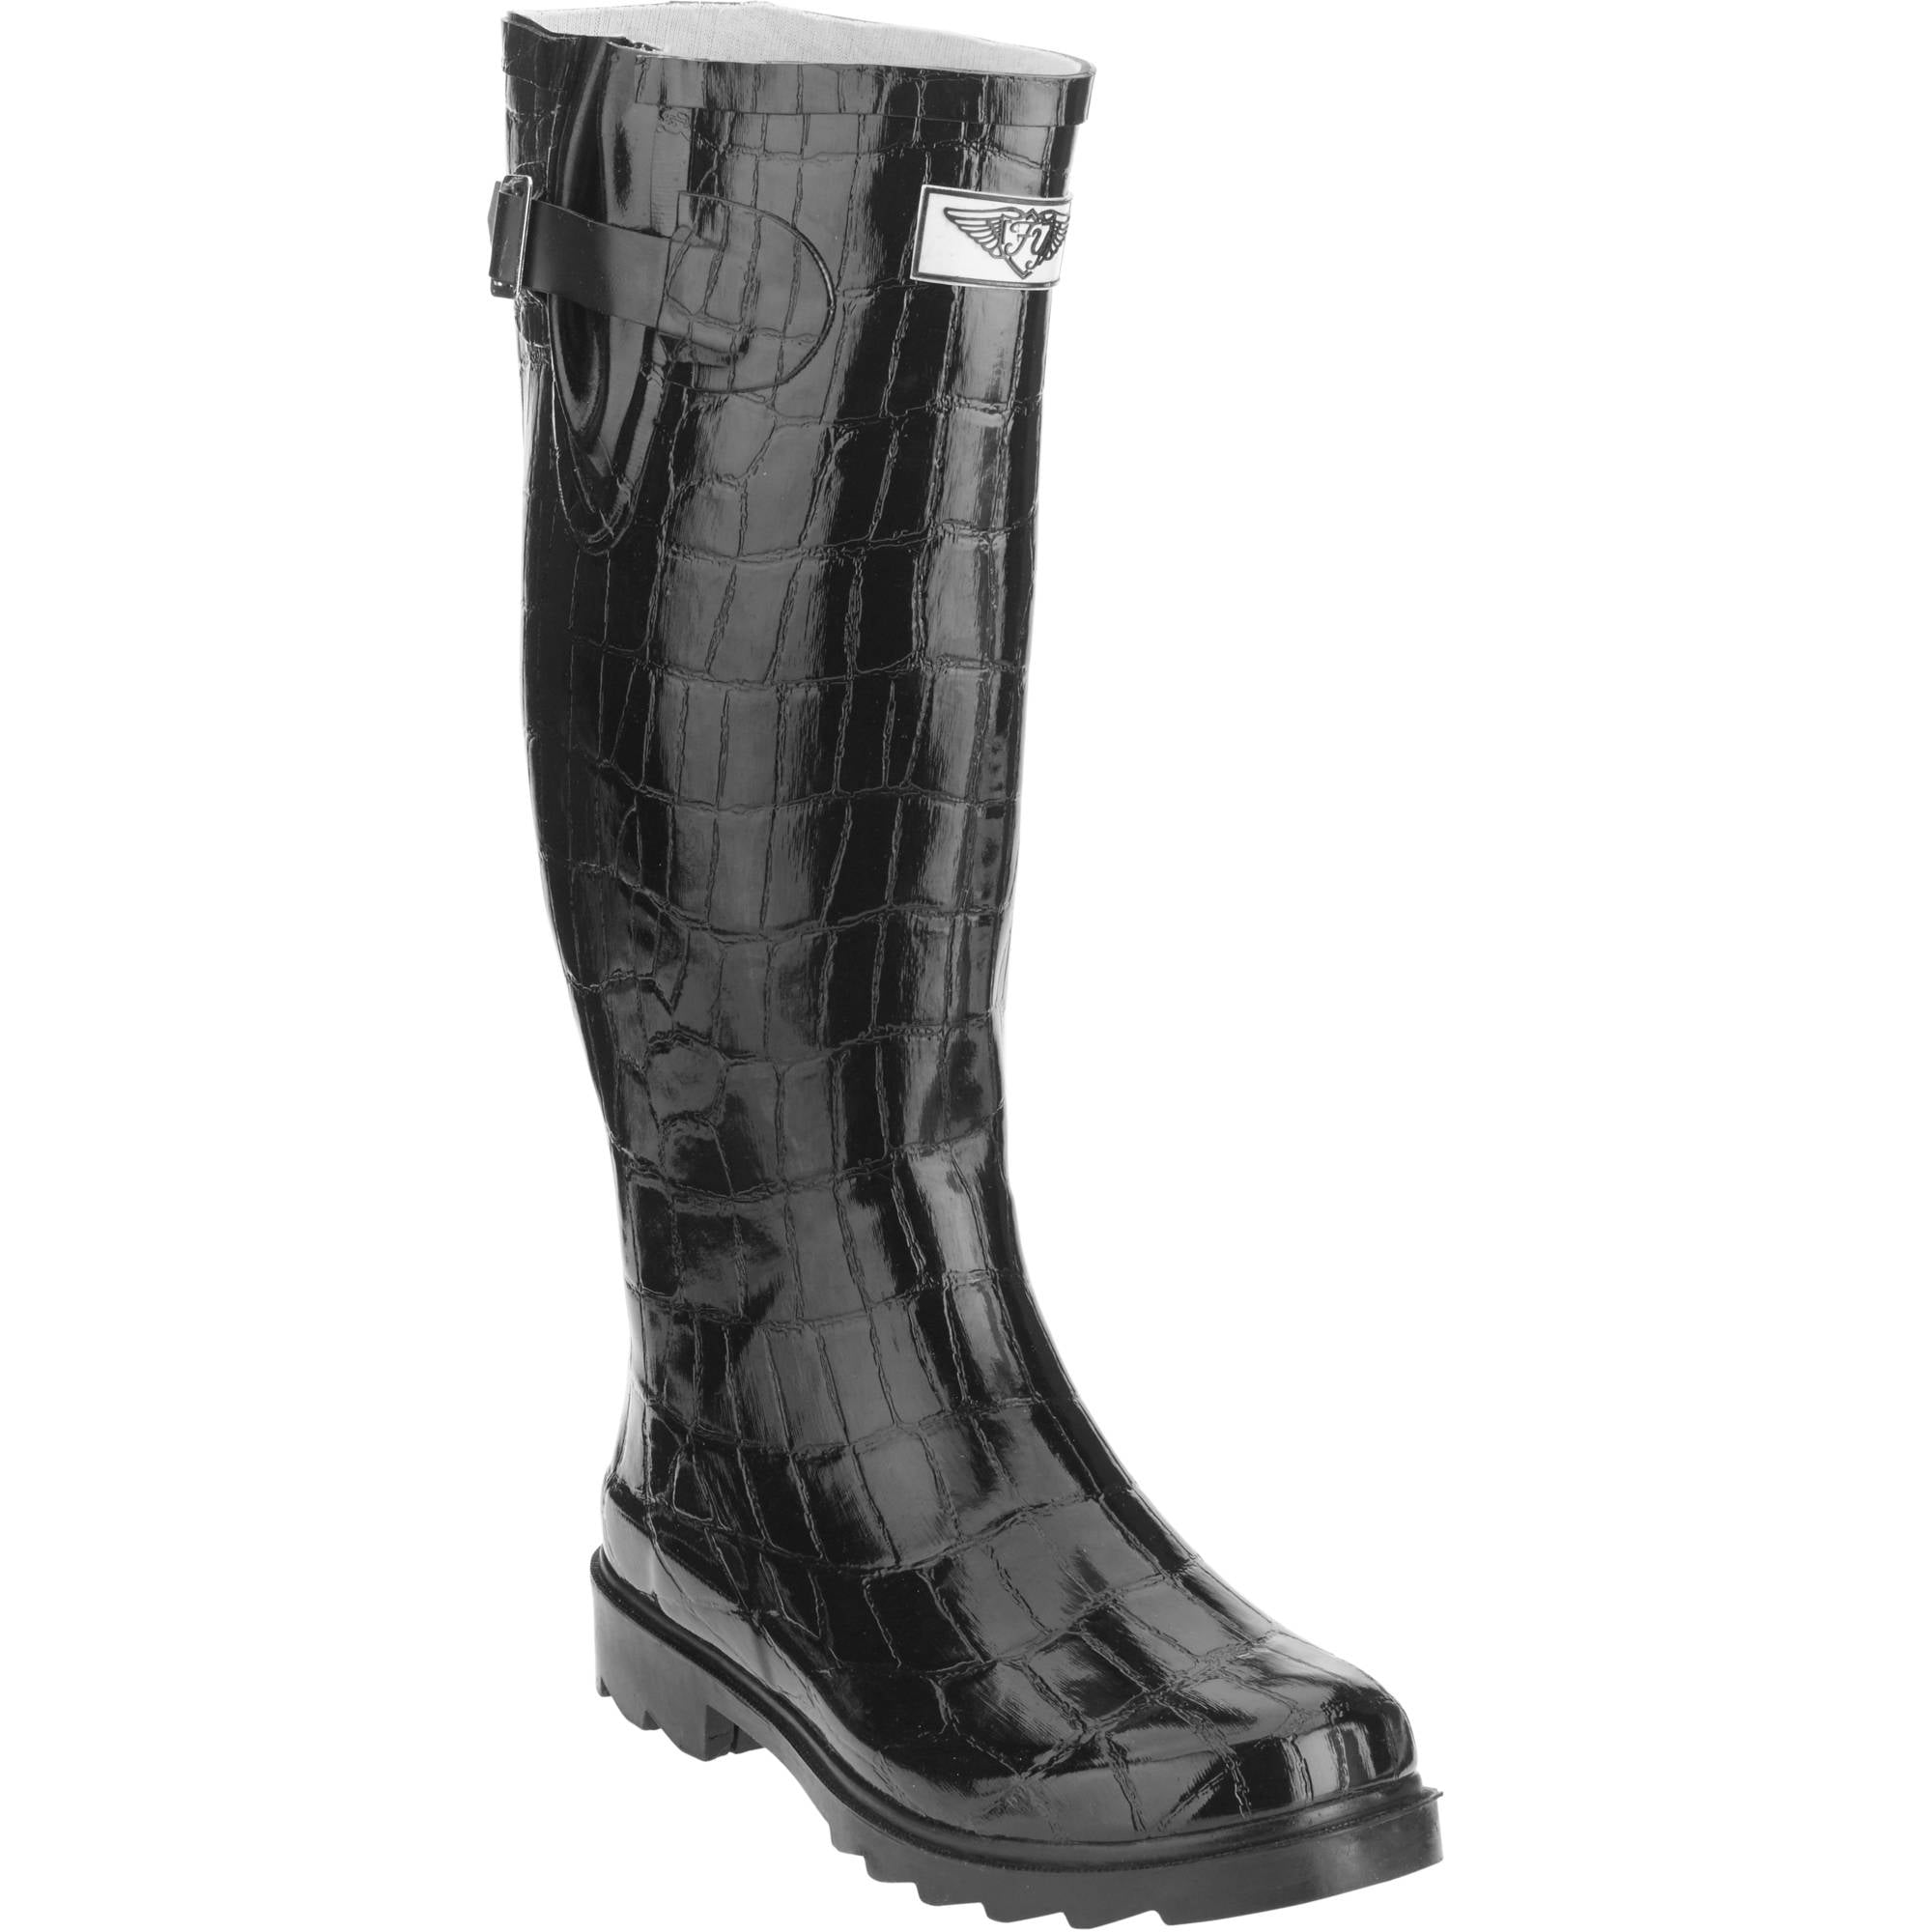 crocs tall rain boots